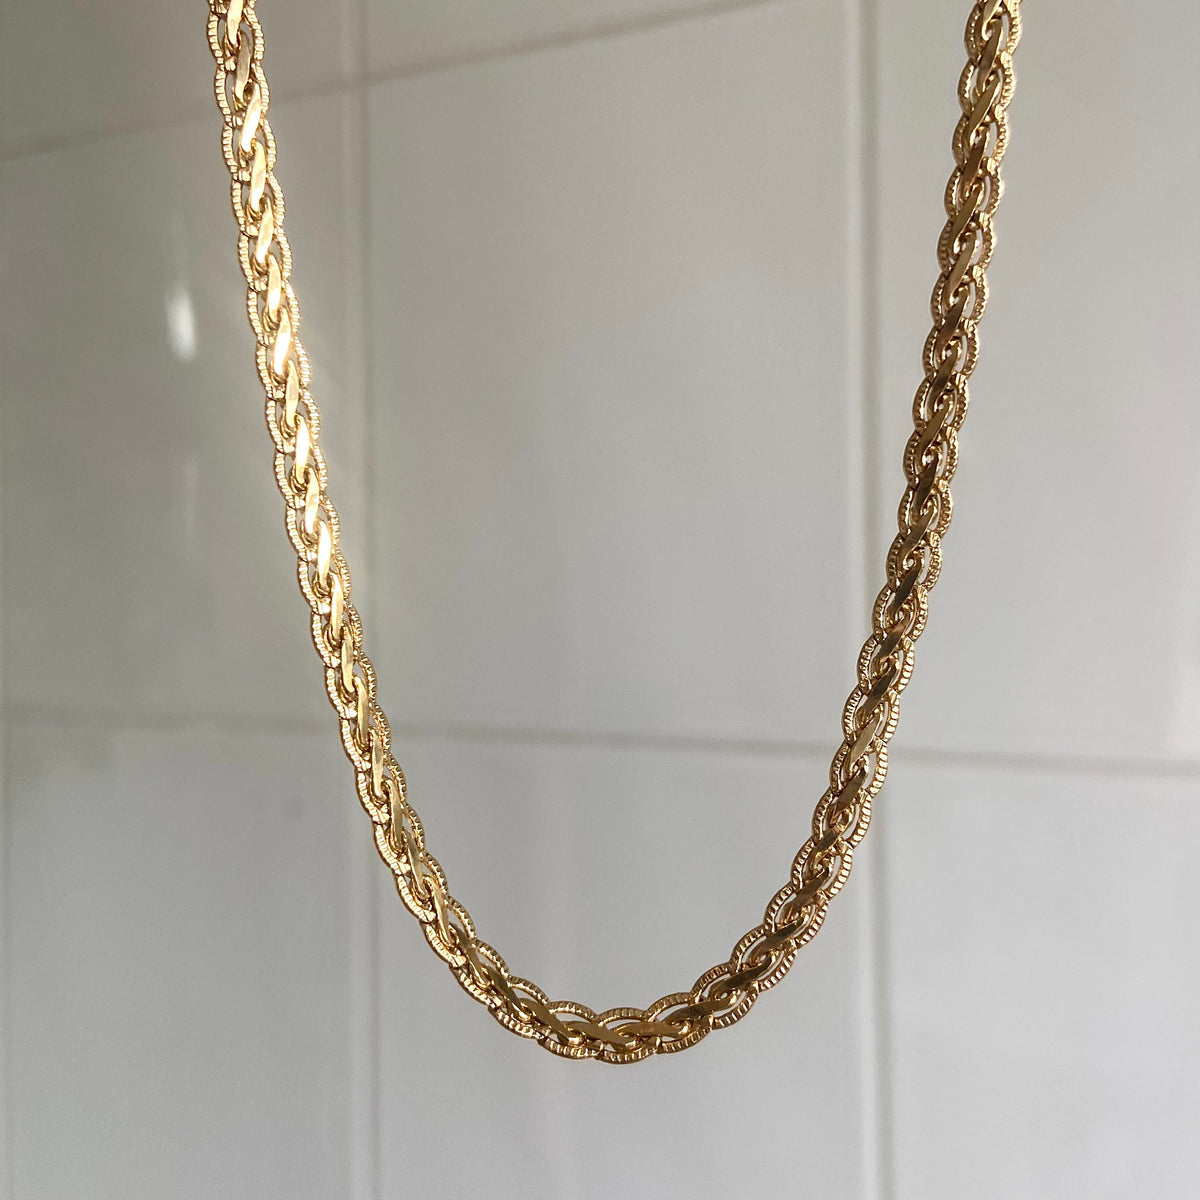 Braided Luxe Chain - Neckontheline